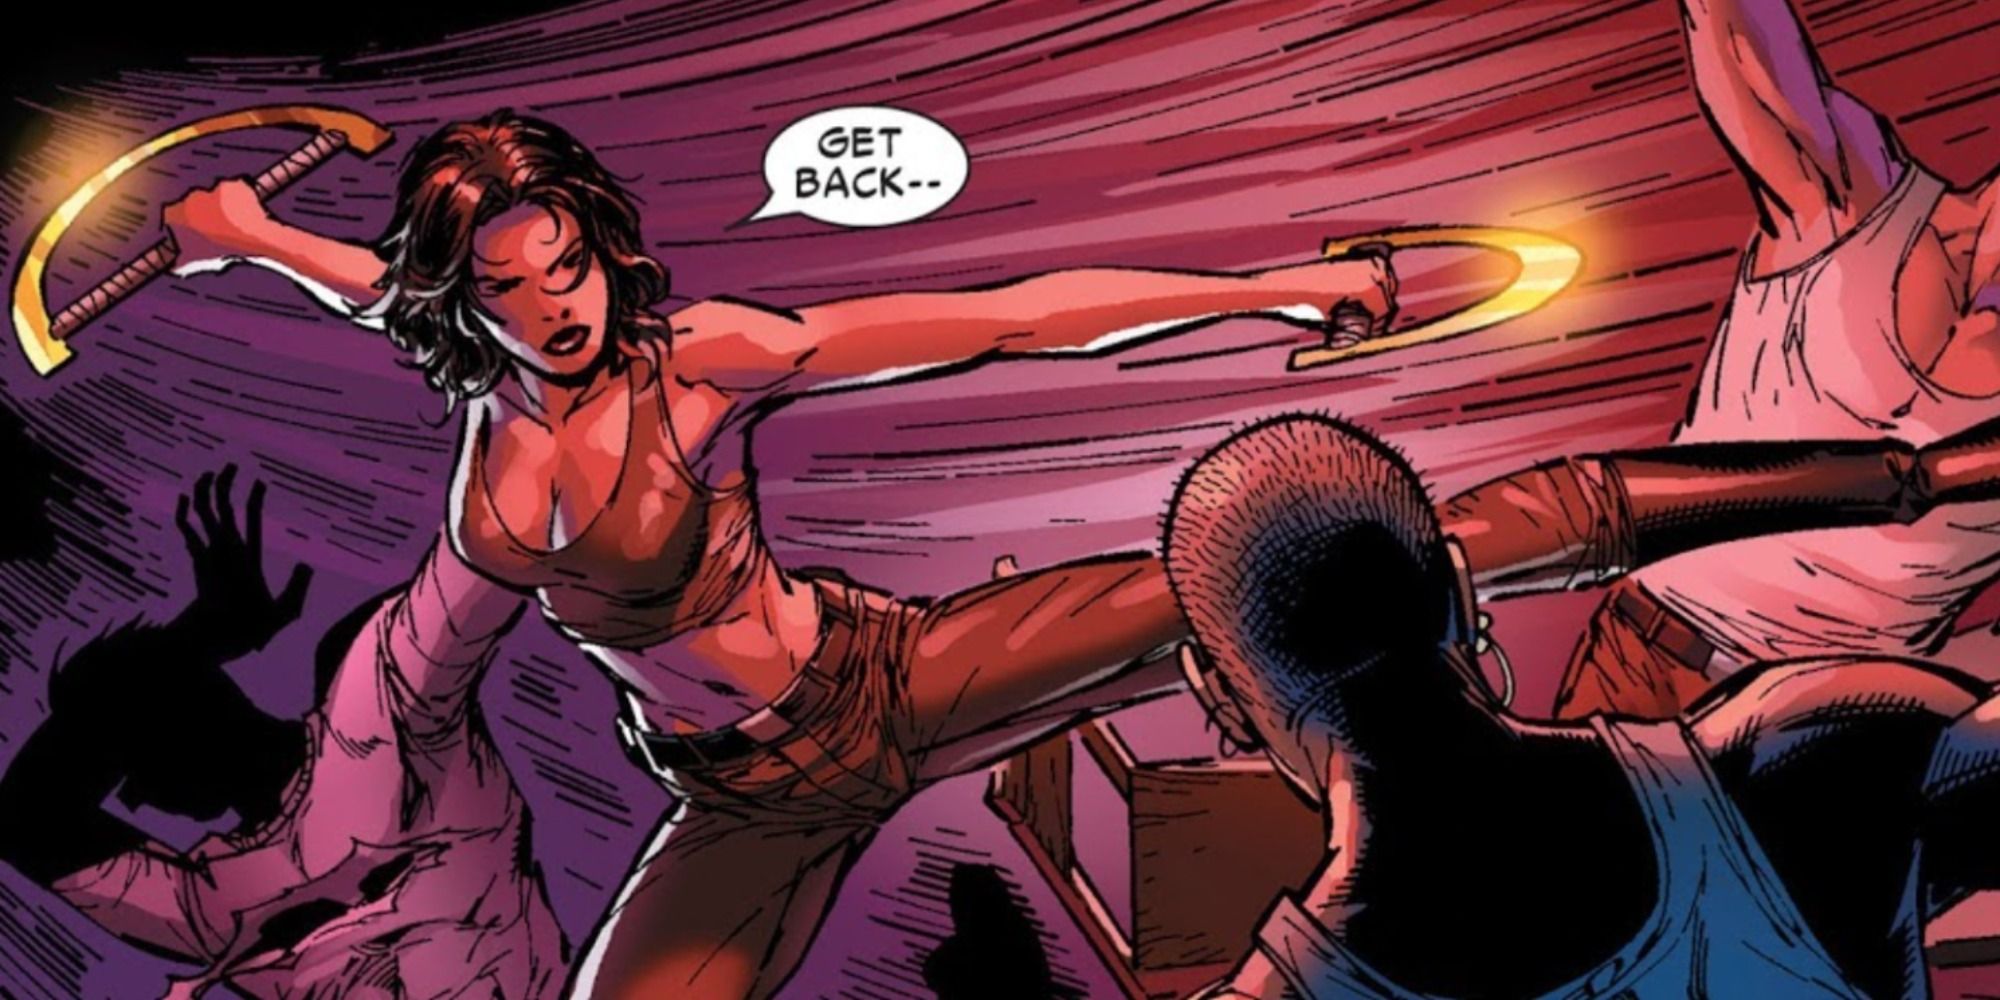 A Clea variant attacks in Marvel Comics.